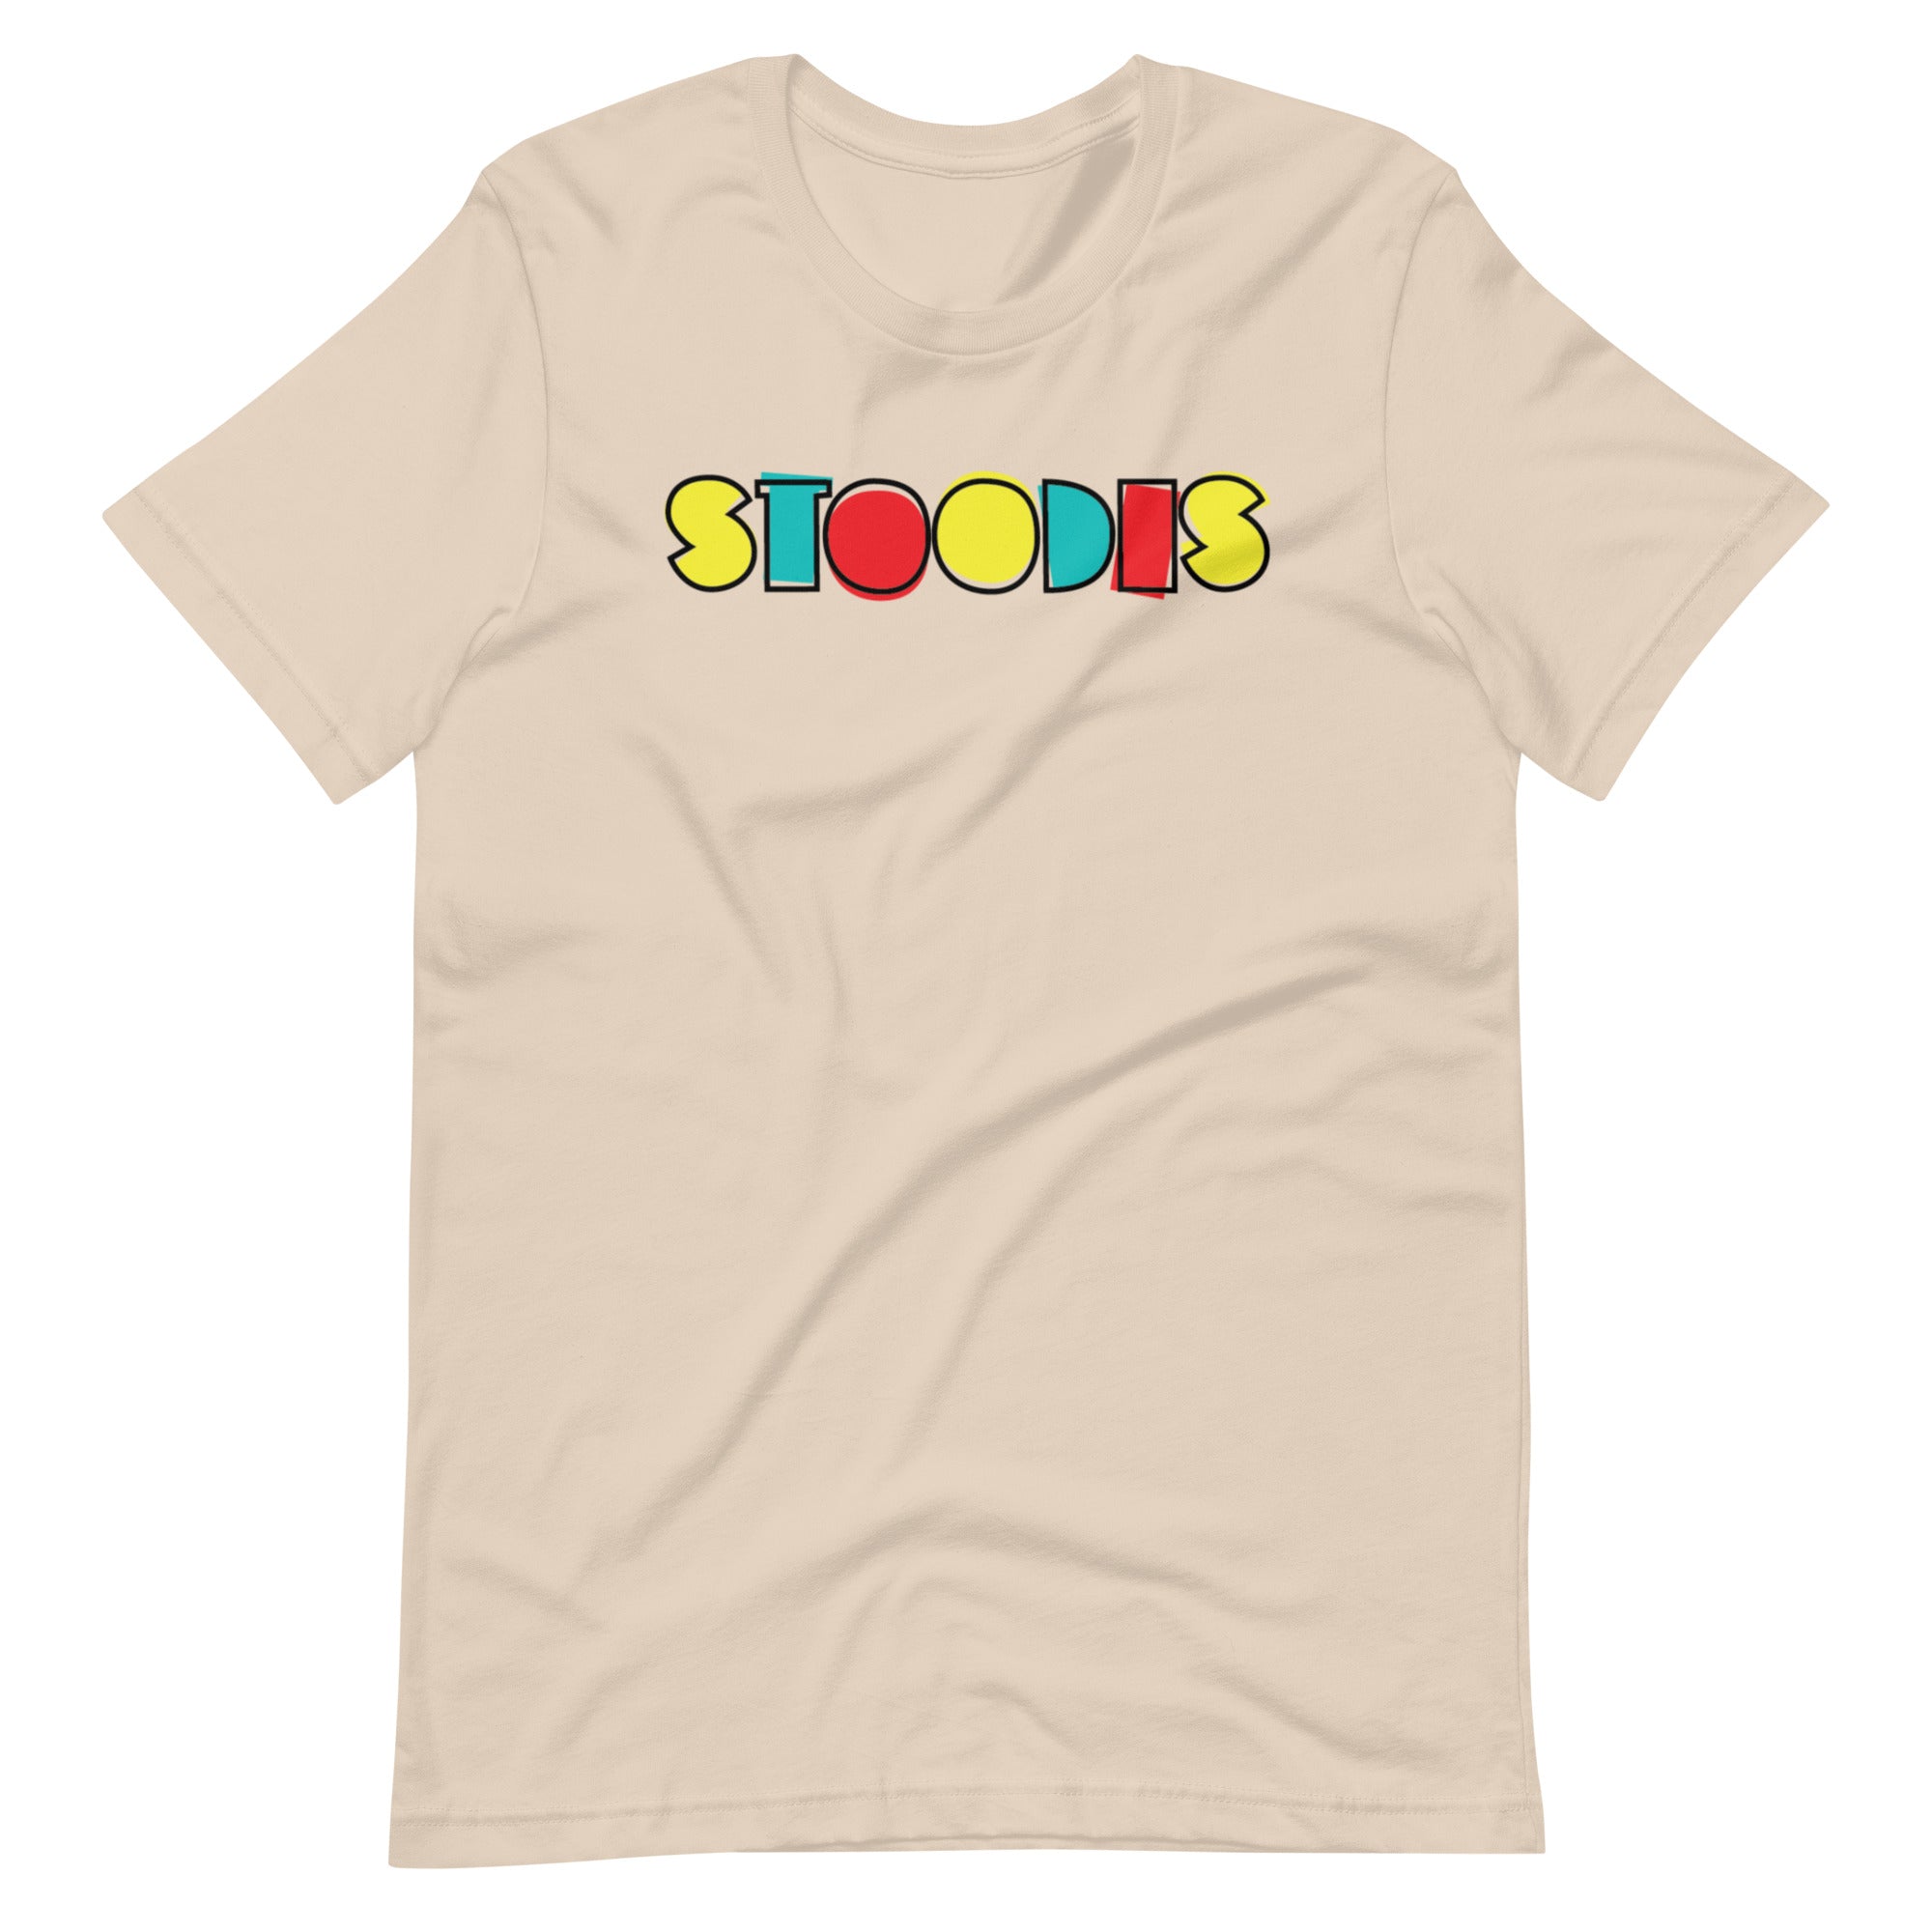 Stoodis t-shirt